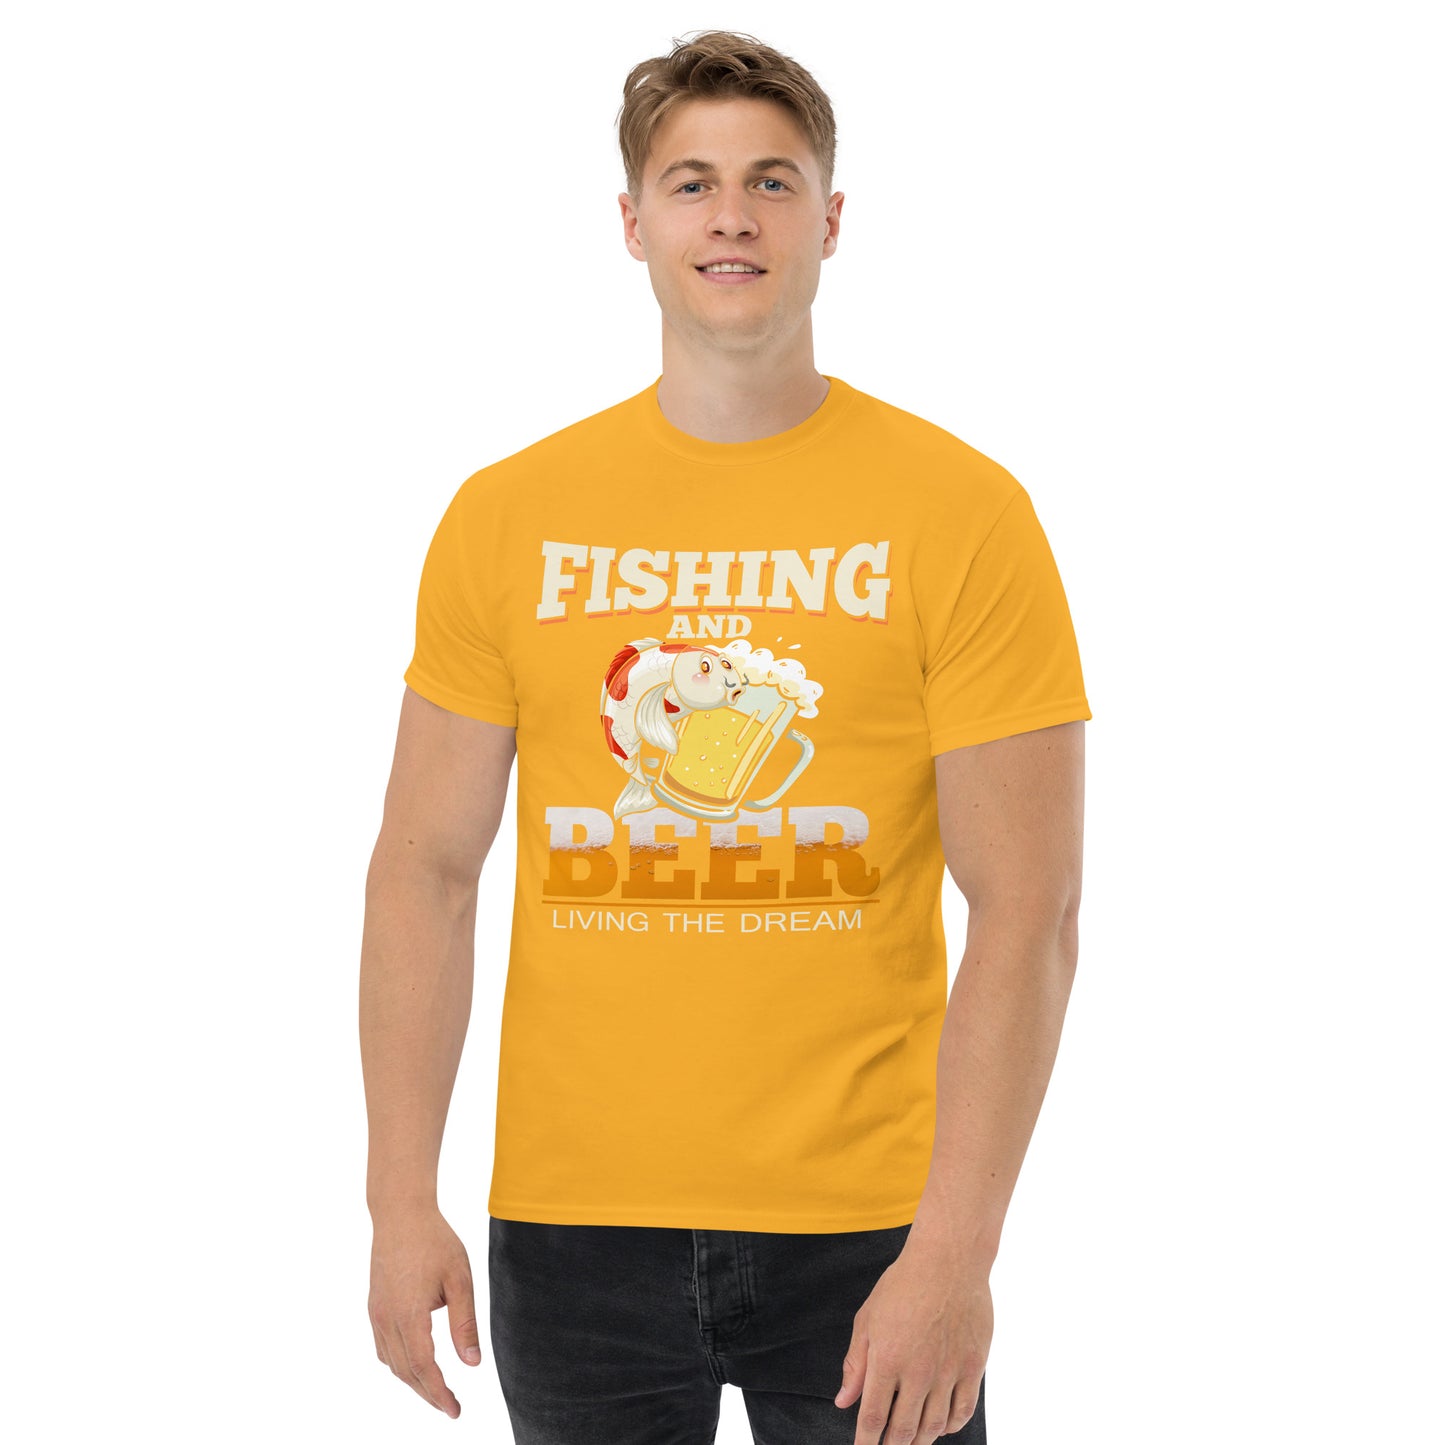 Fishing & Beer, Living The Dream T-Shirt